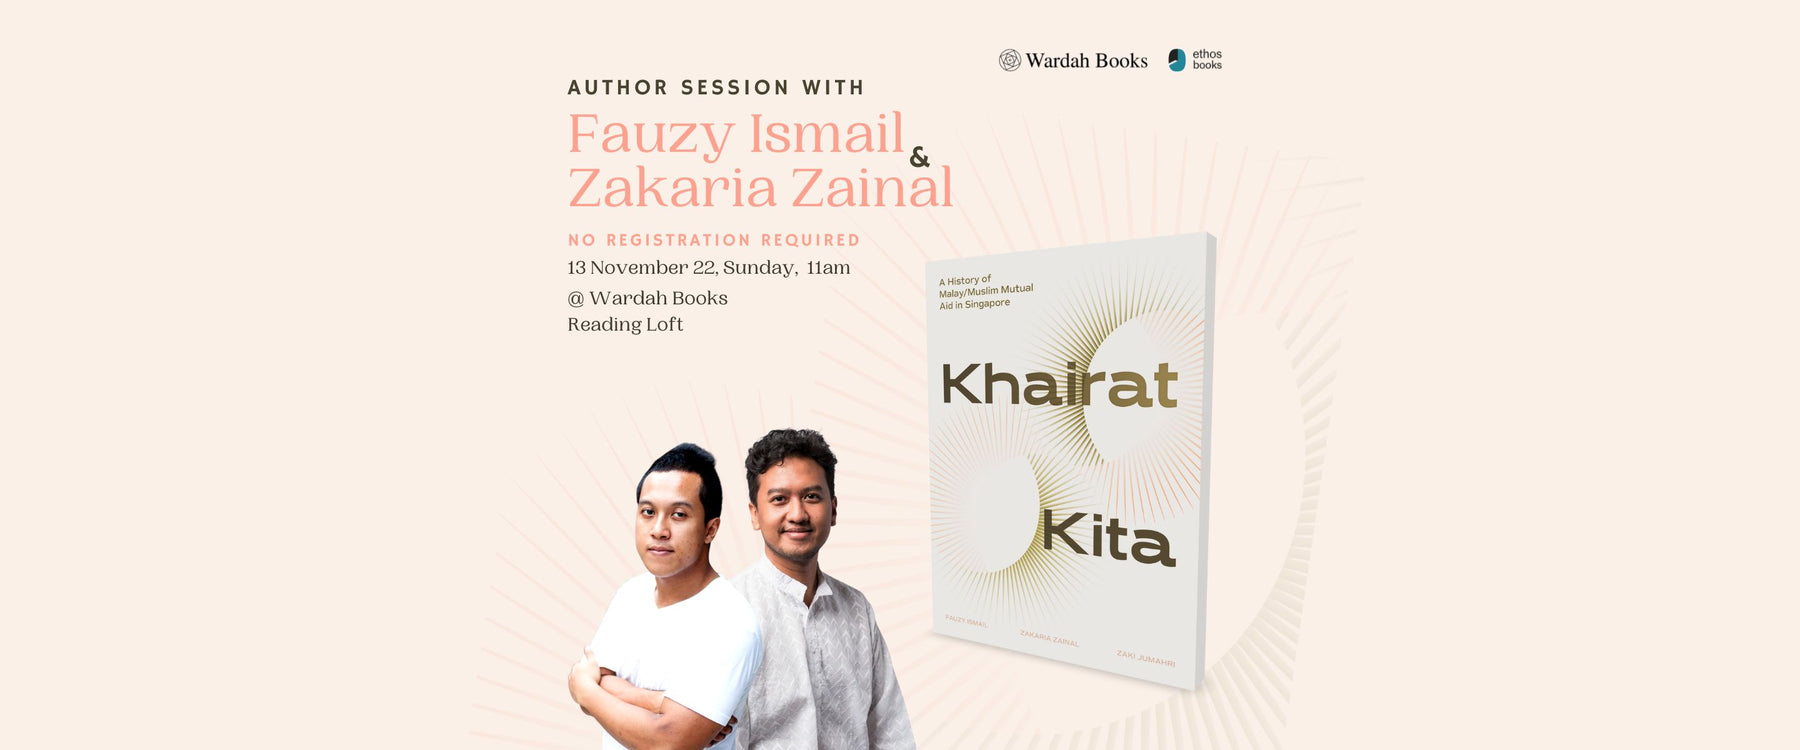 Author Session with Fauzy Ismail & Zakaria Zainal